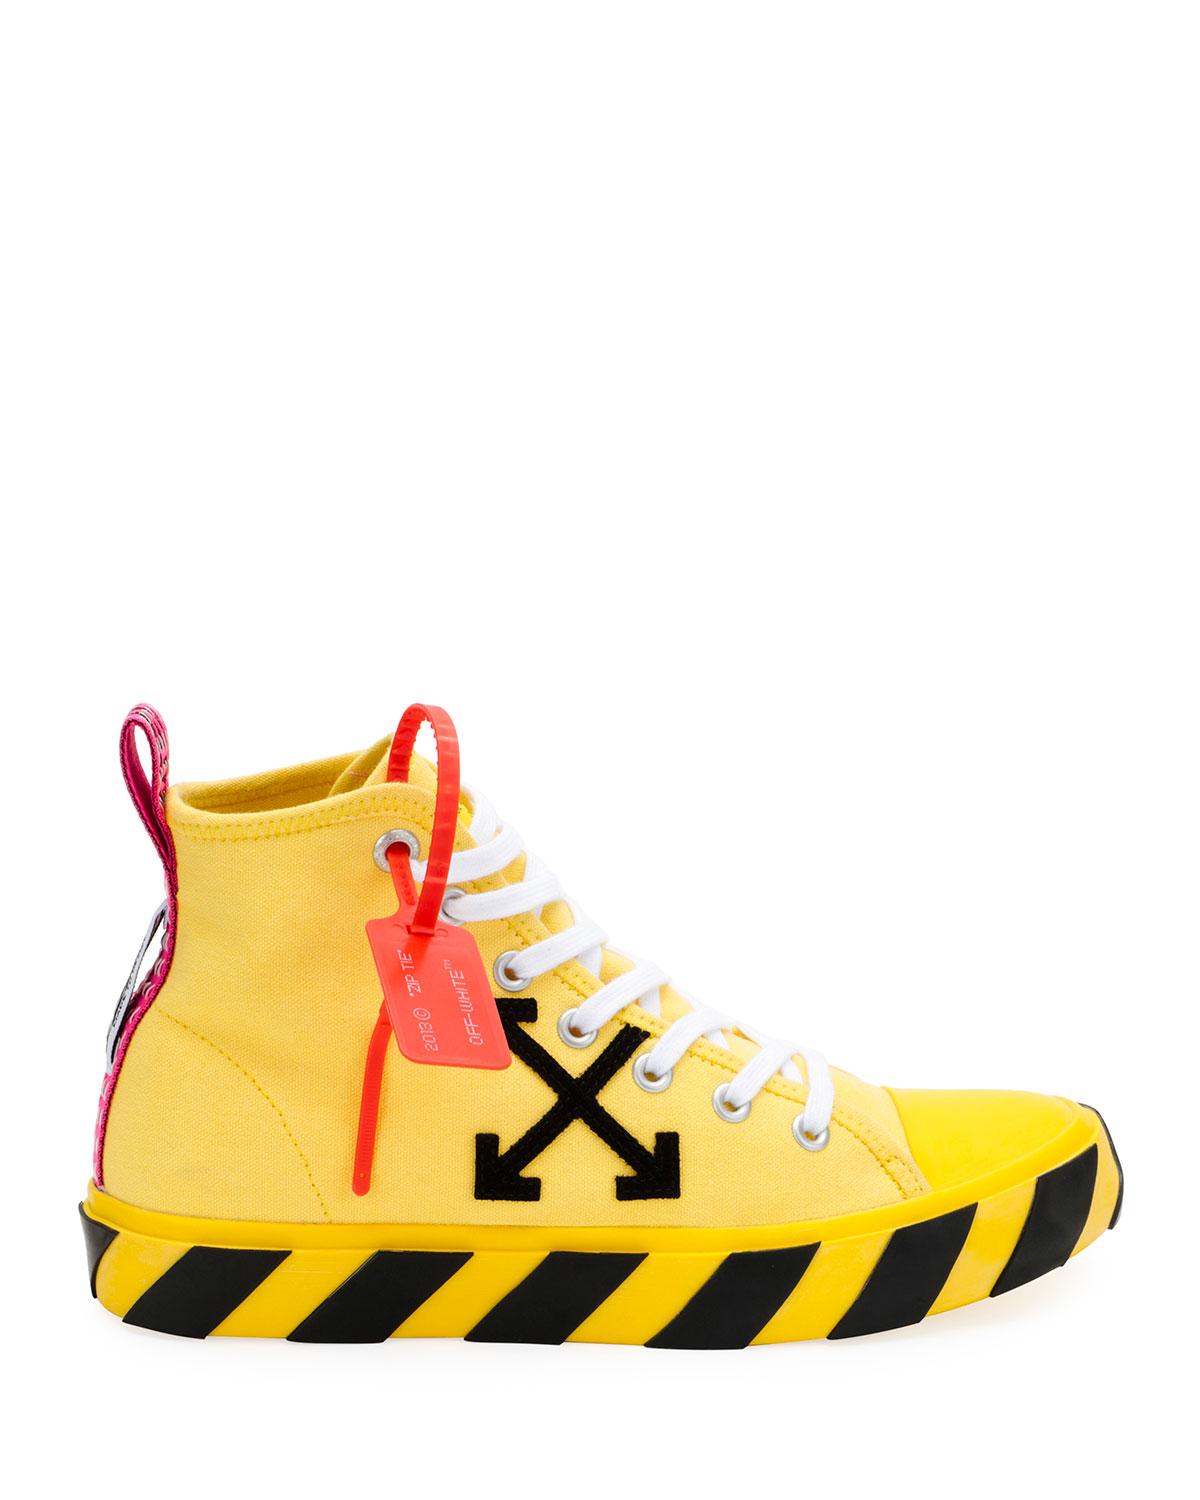 off white shoes yellow stripe